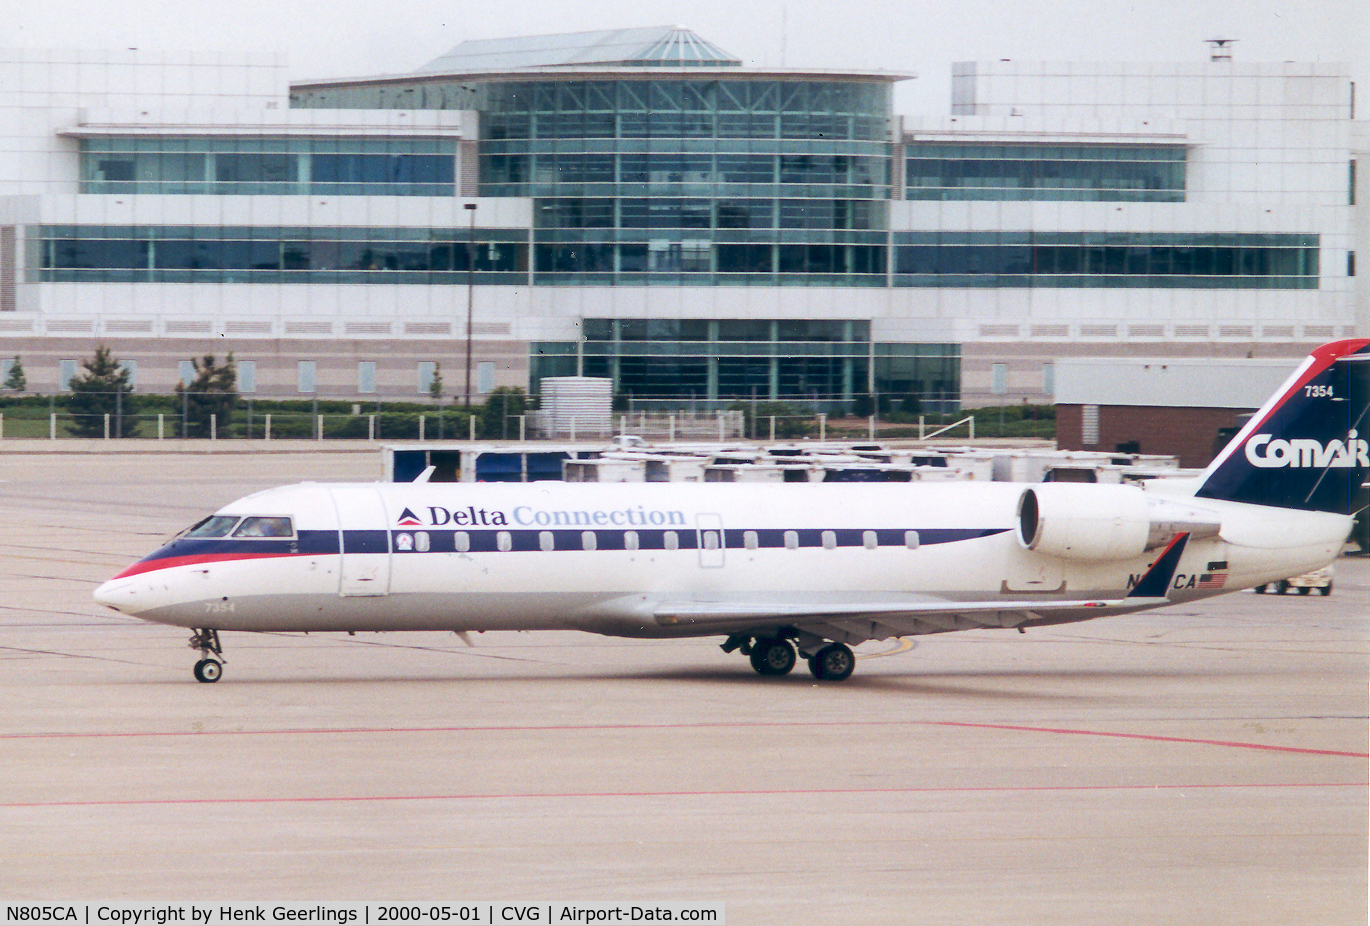 N805CA, 1999 Bombardier CRJ-100ER (CL-600-2B19) C/N 7354, Comair Delta Connection